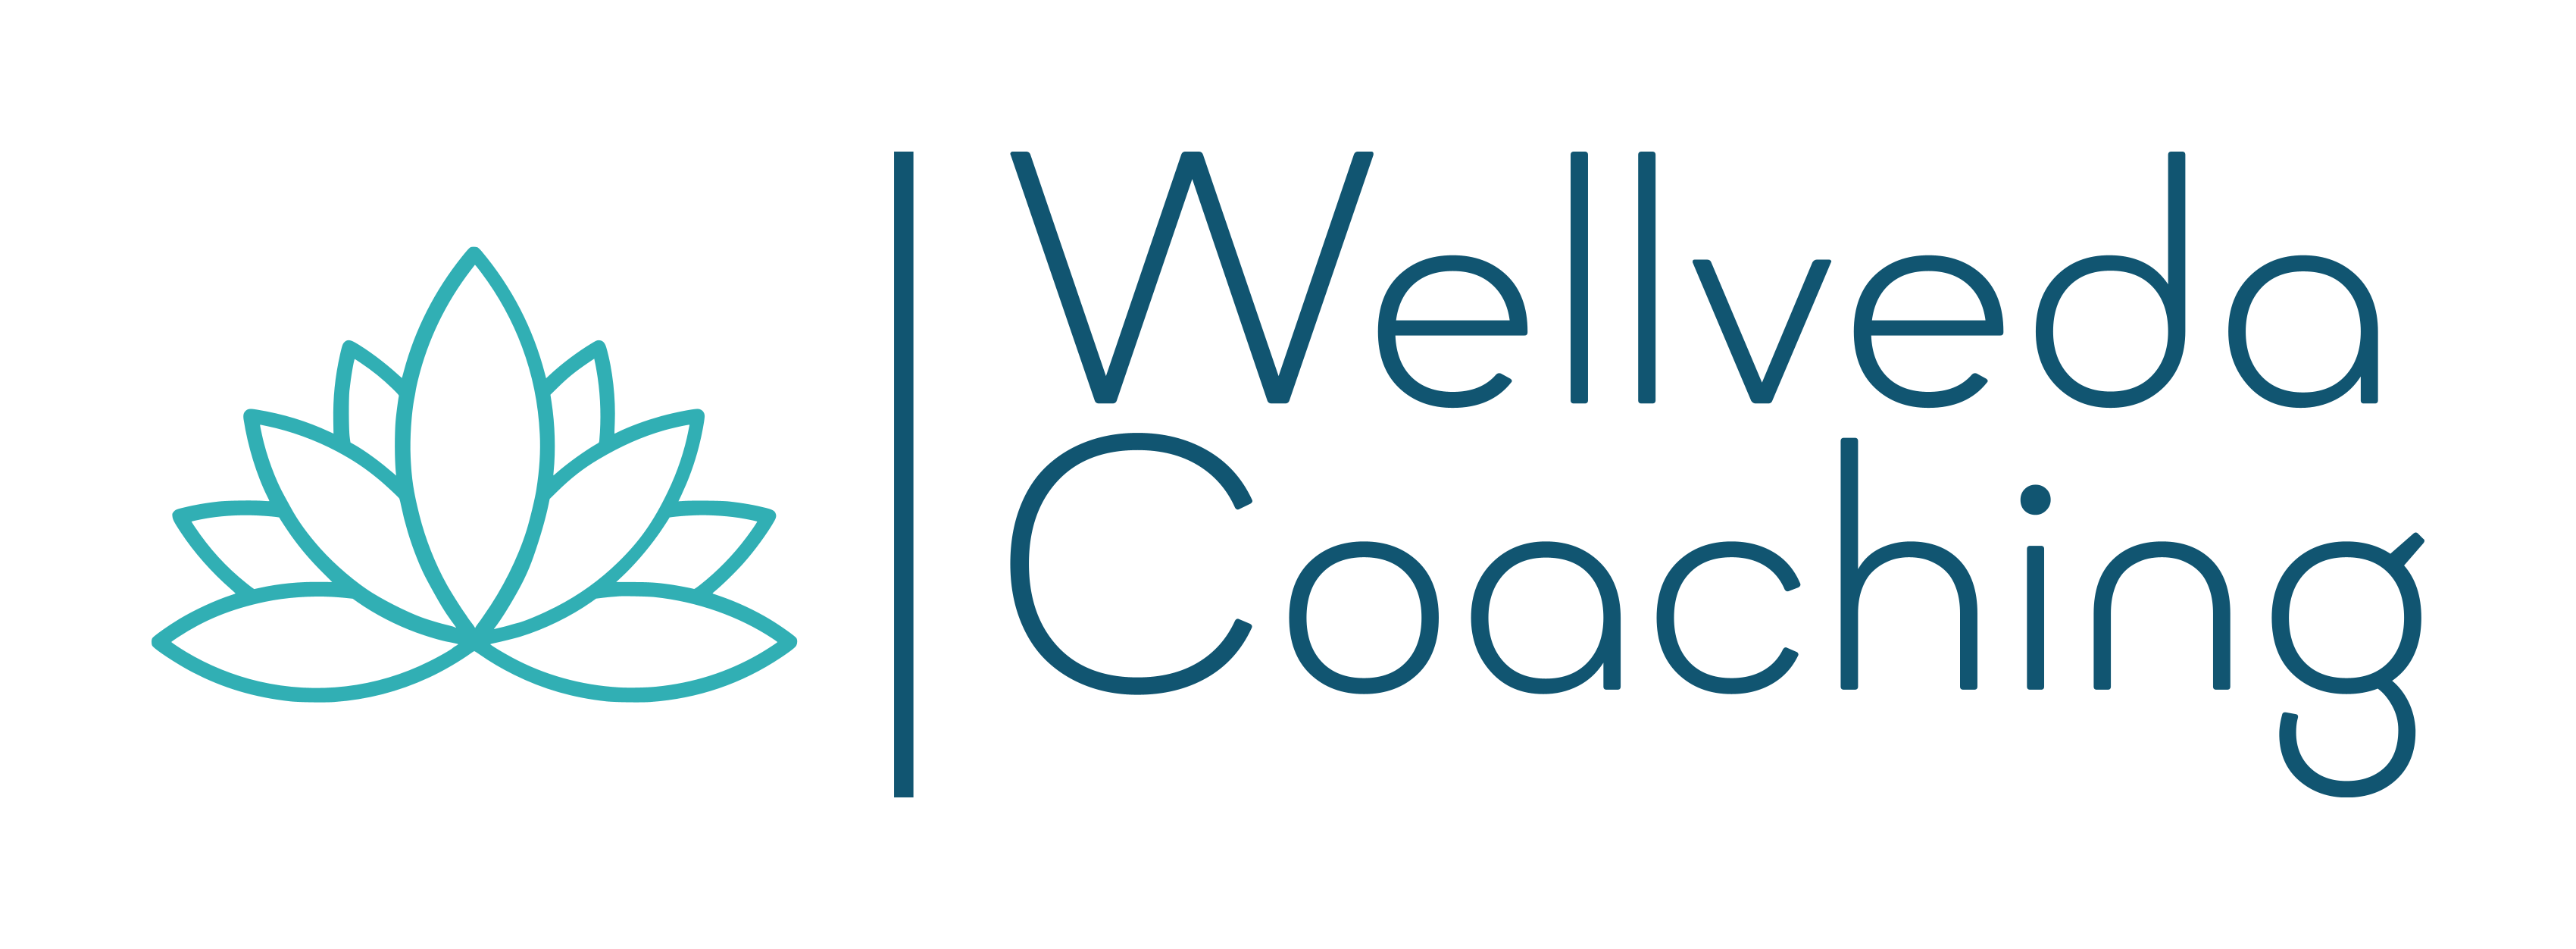   Wellveda Coaching by Kim V